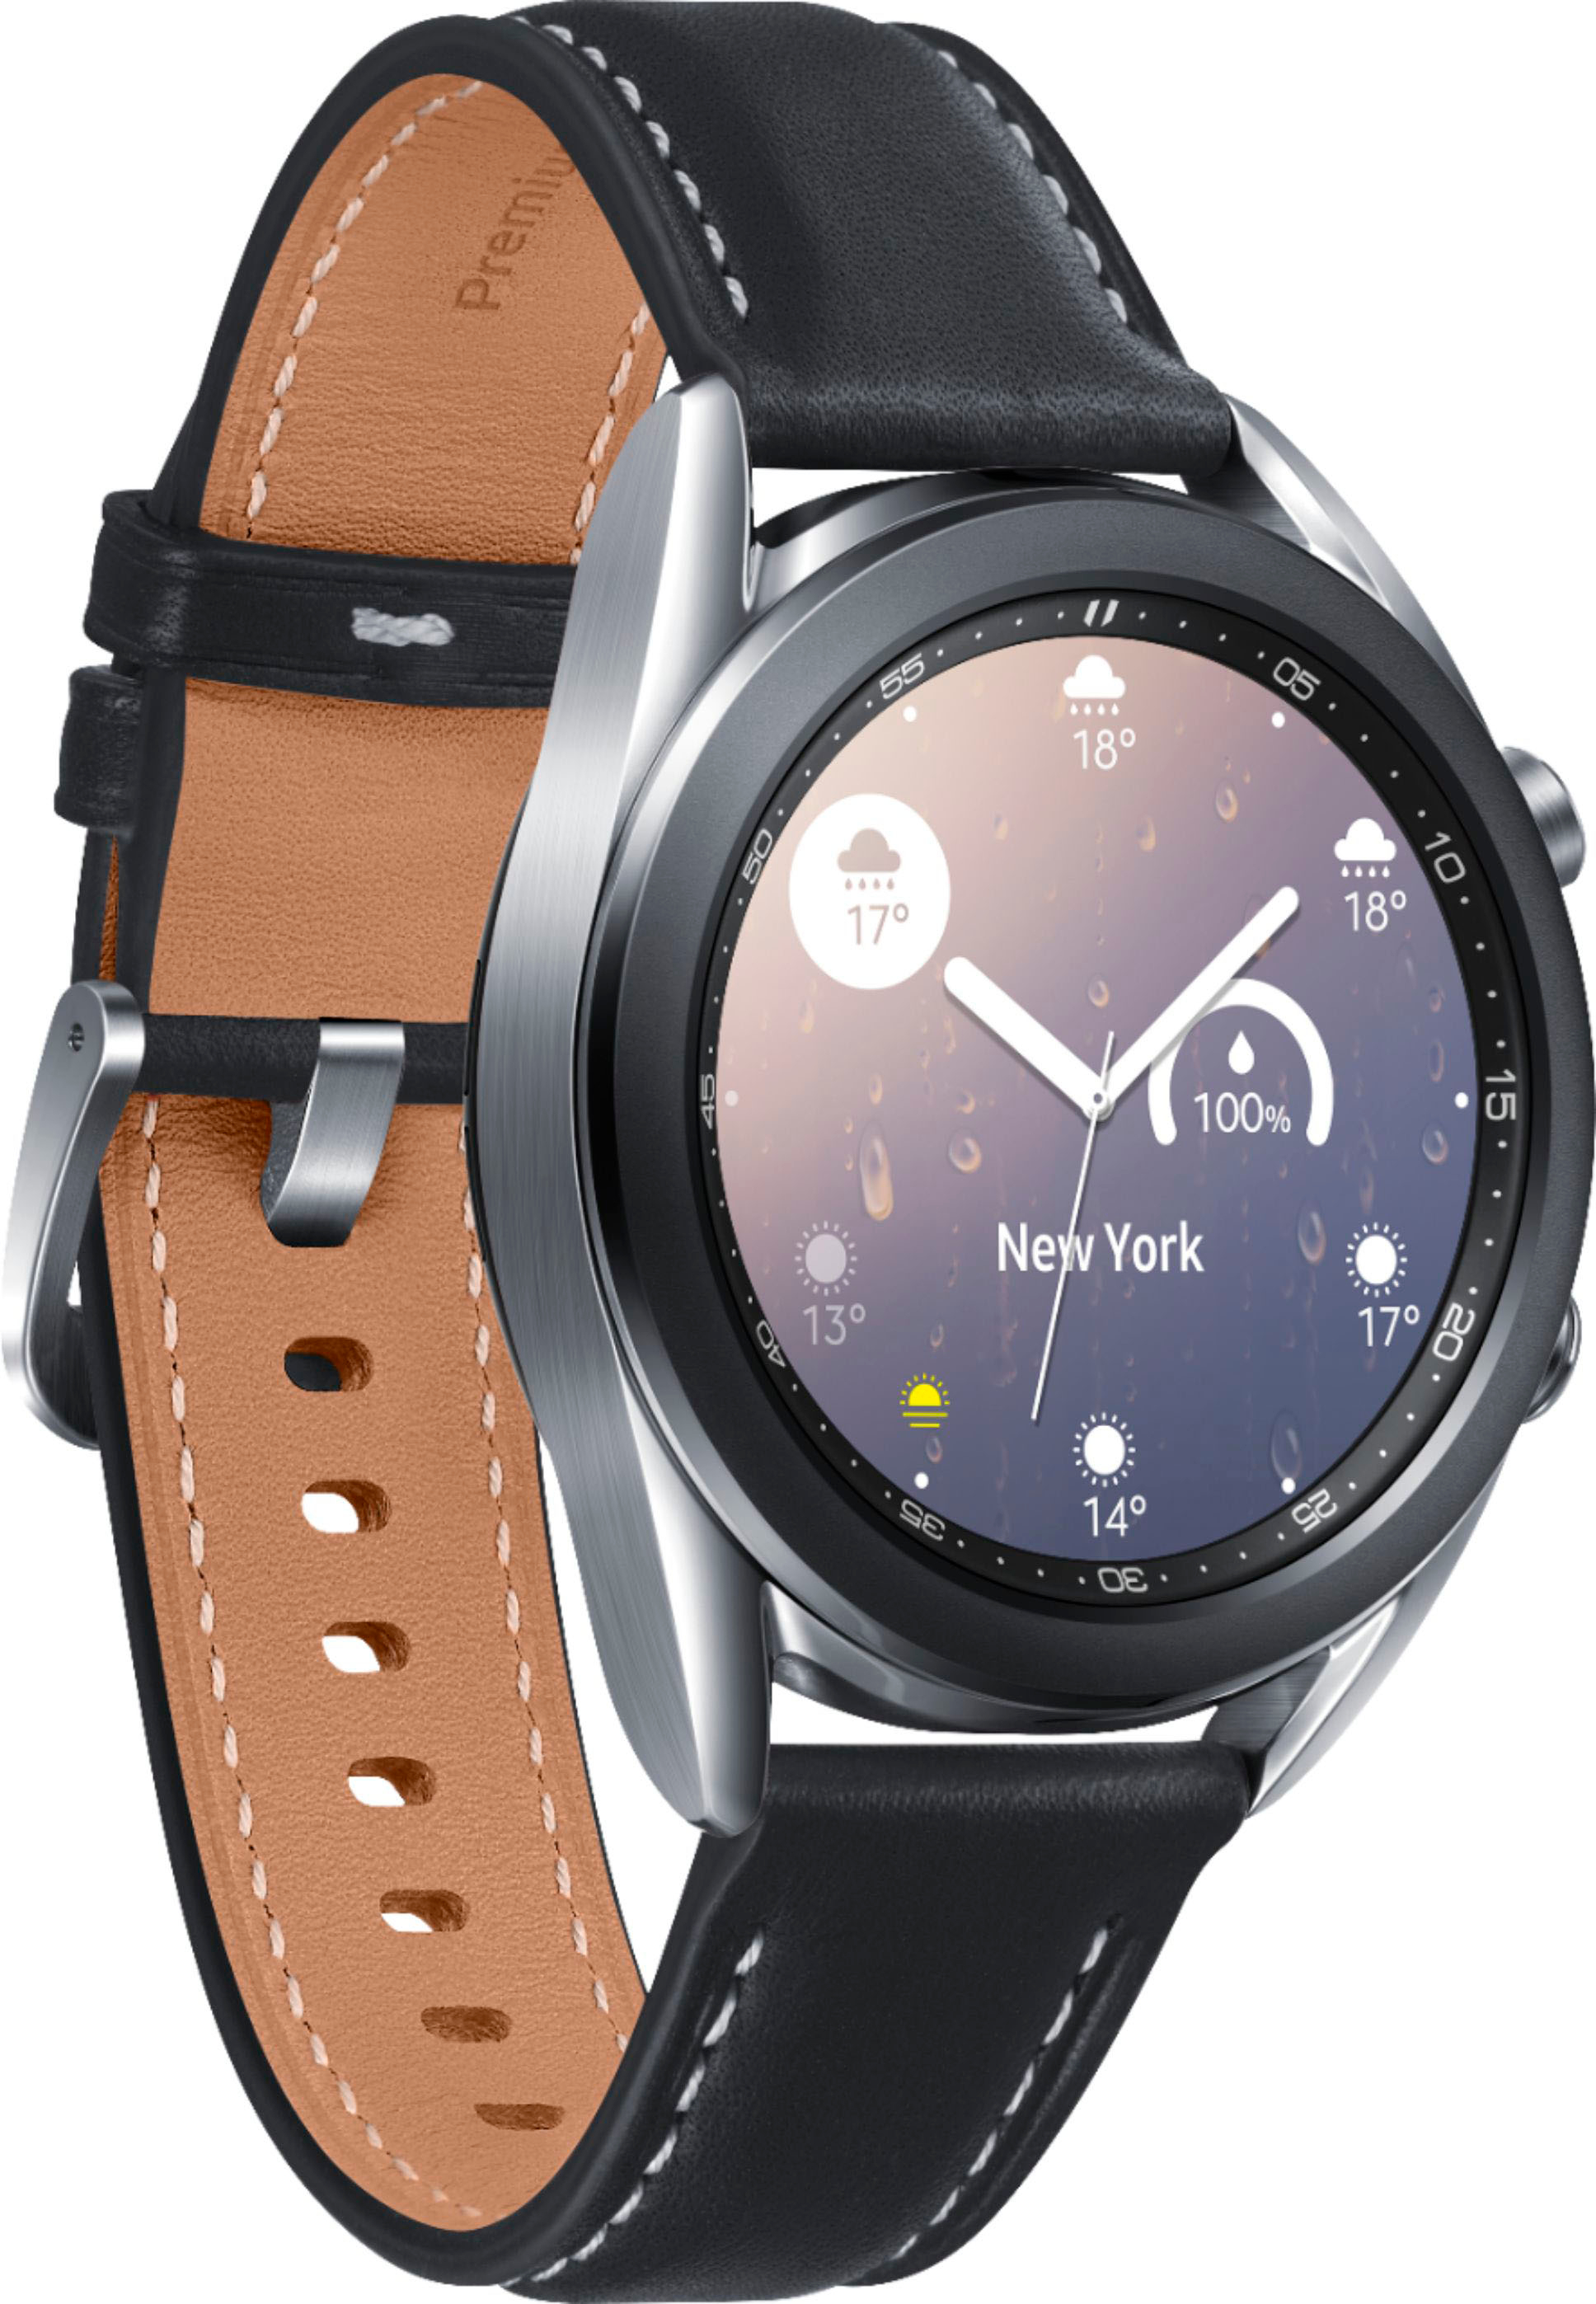 Samsung Geek Squad Certified Refurbished Galaxy Watch3 Smartwatch 